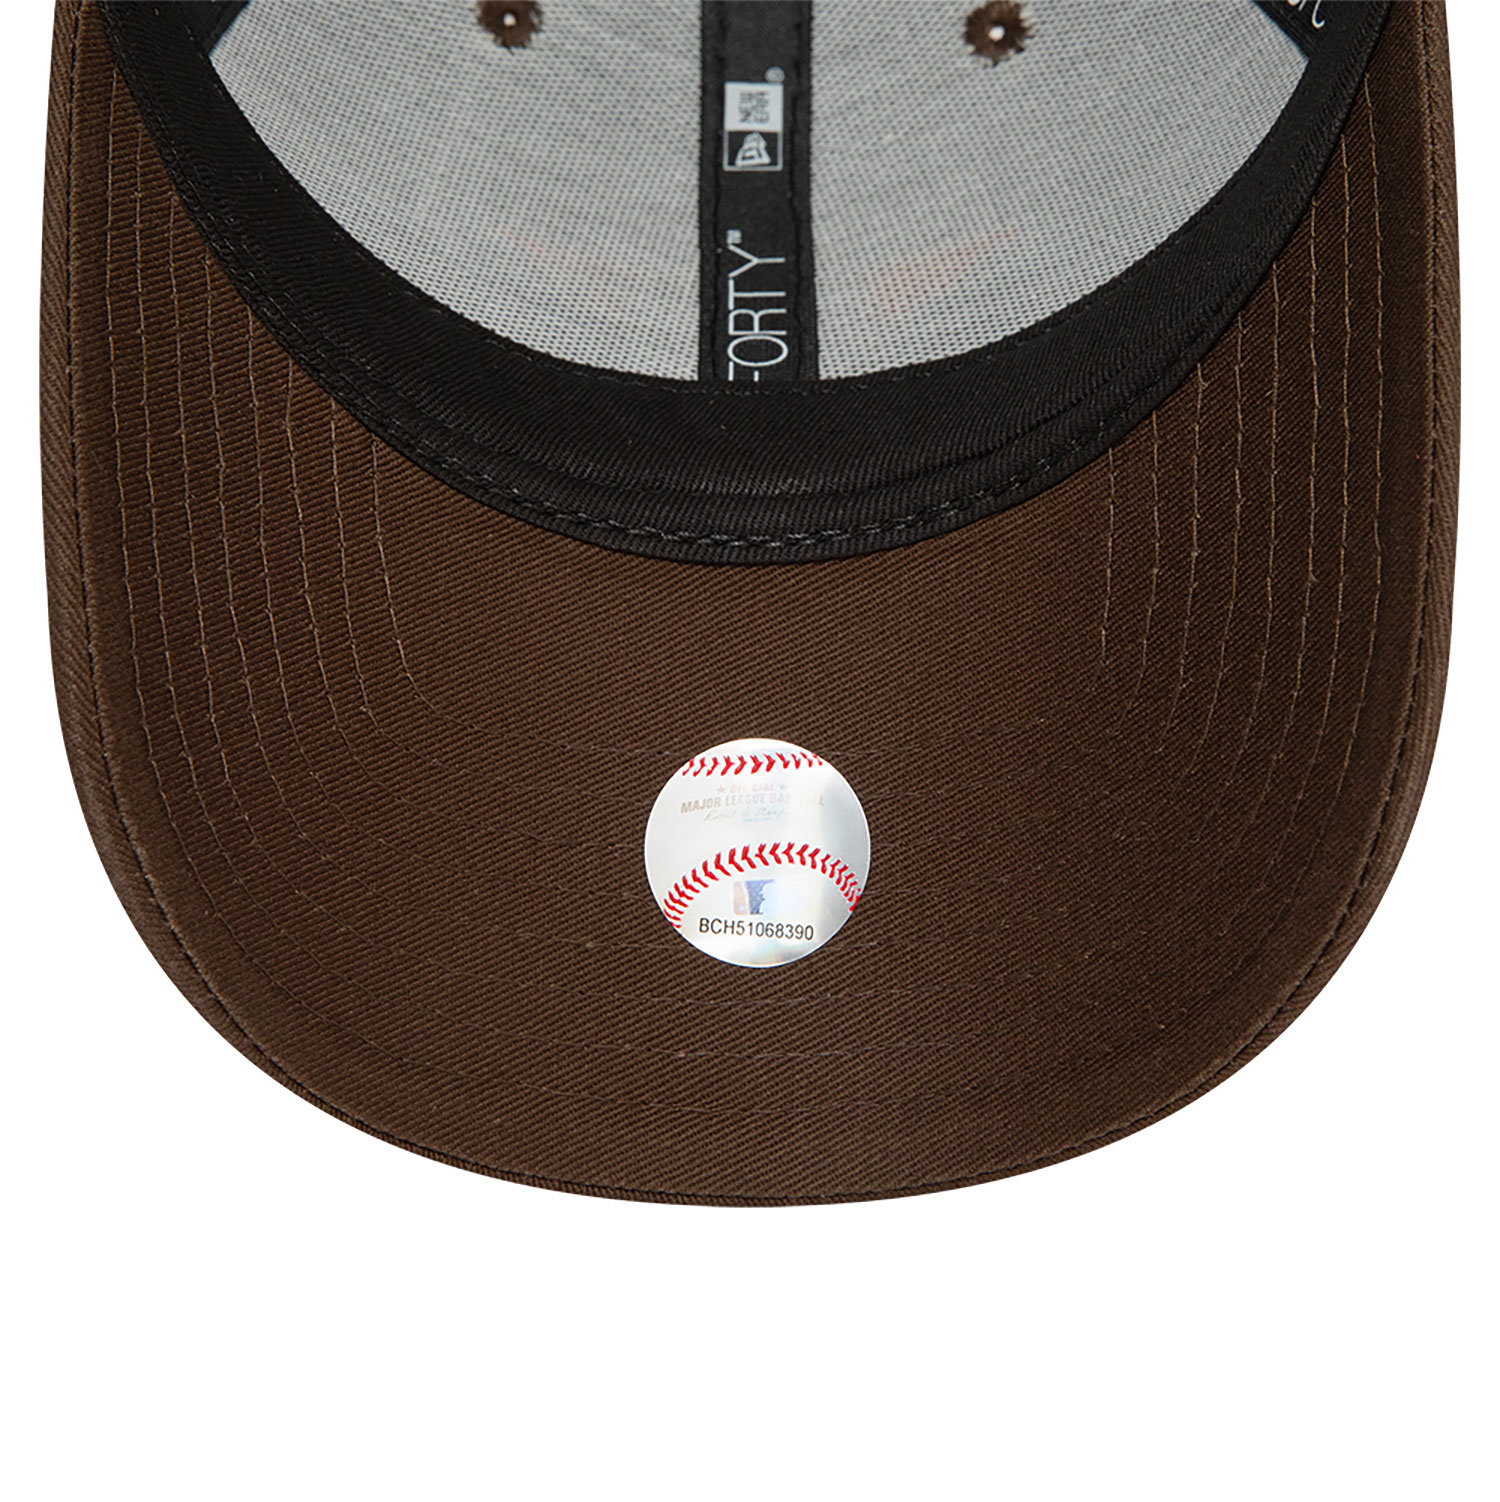 Braune Houston Astros World Series Patch 9FORTY Verstellbare Cap